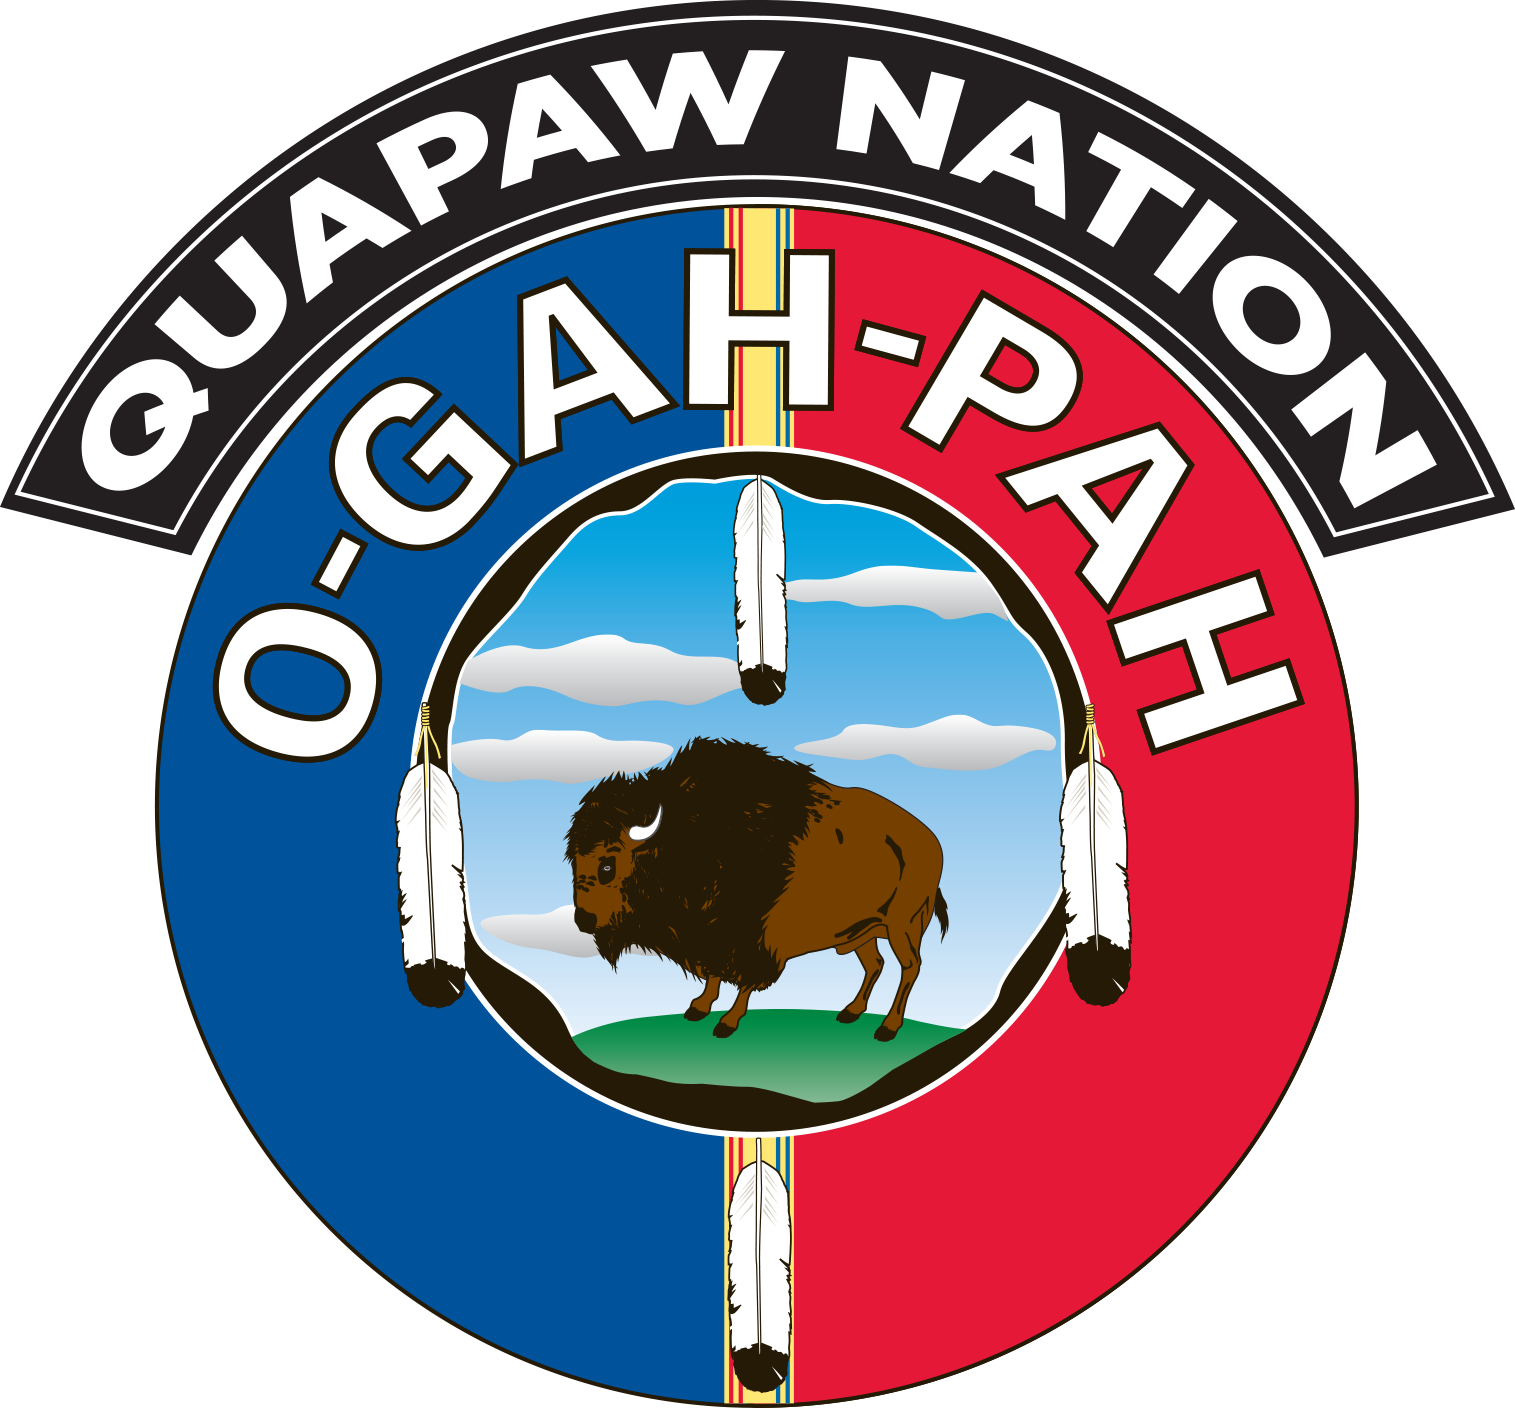 Quapaw Nation’s Sara